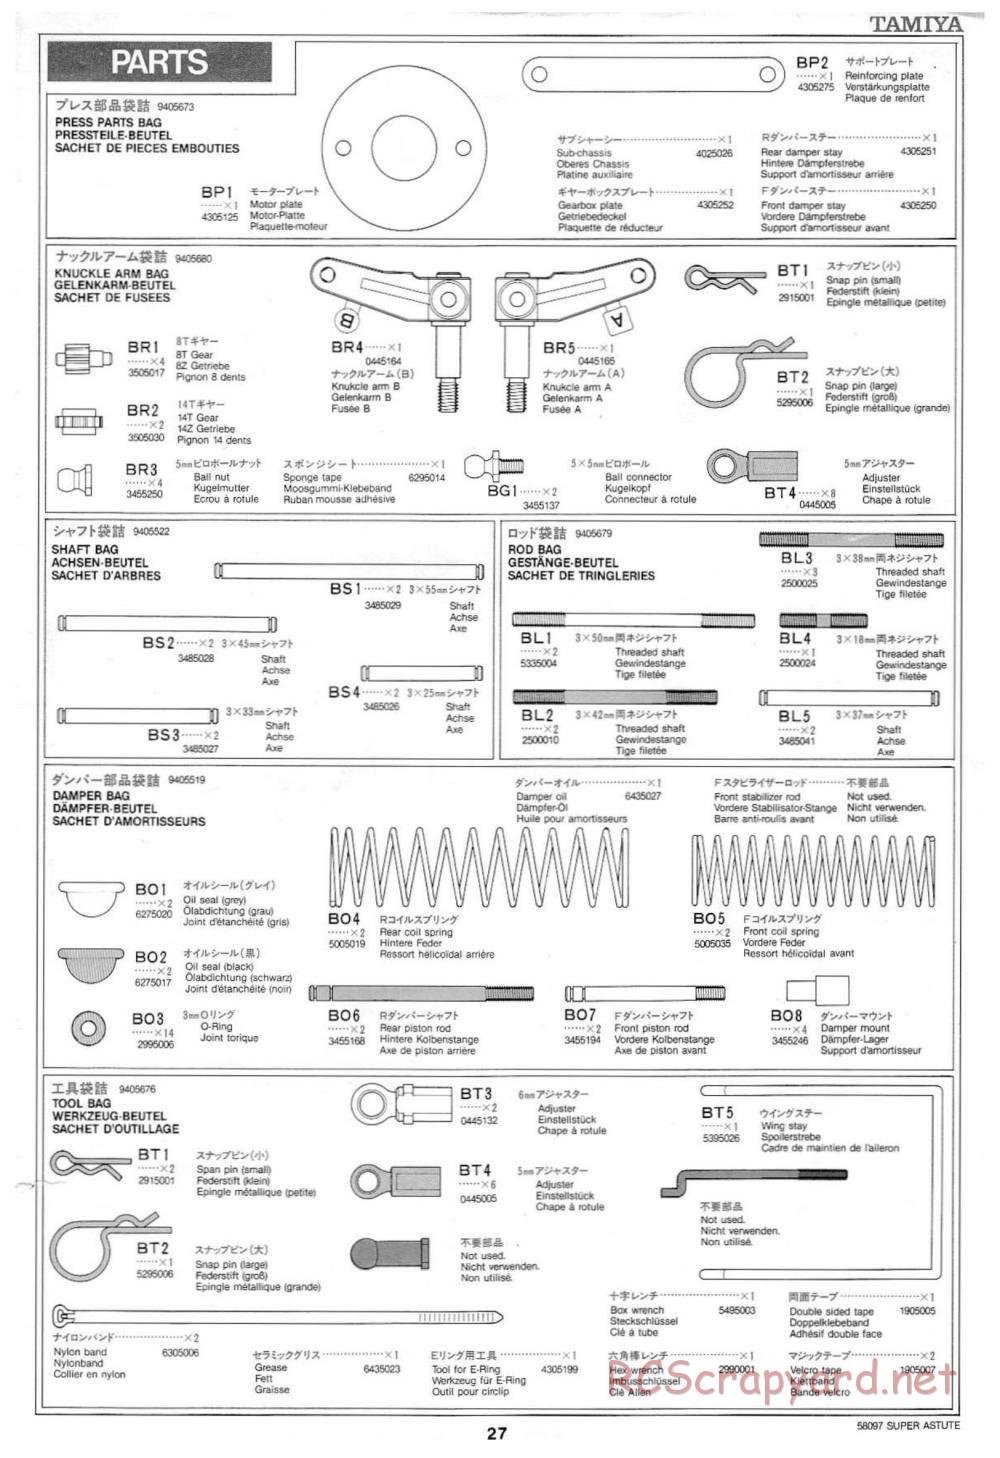 Tamiya - Super Astute - 58097 - Manual - Page 27